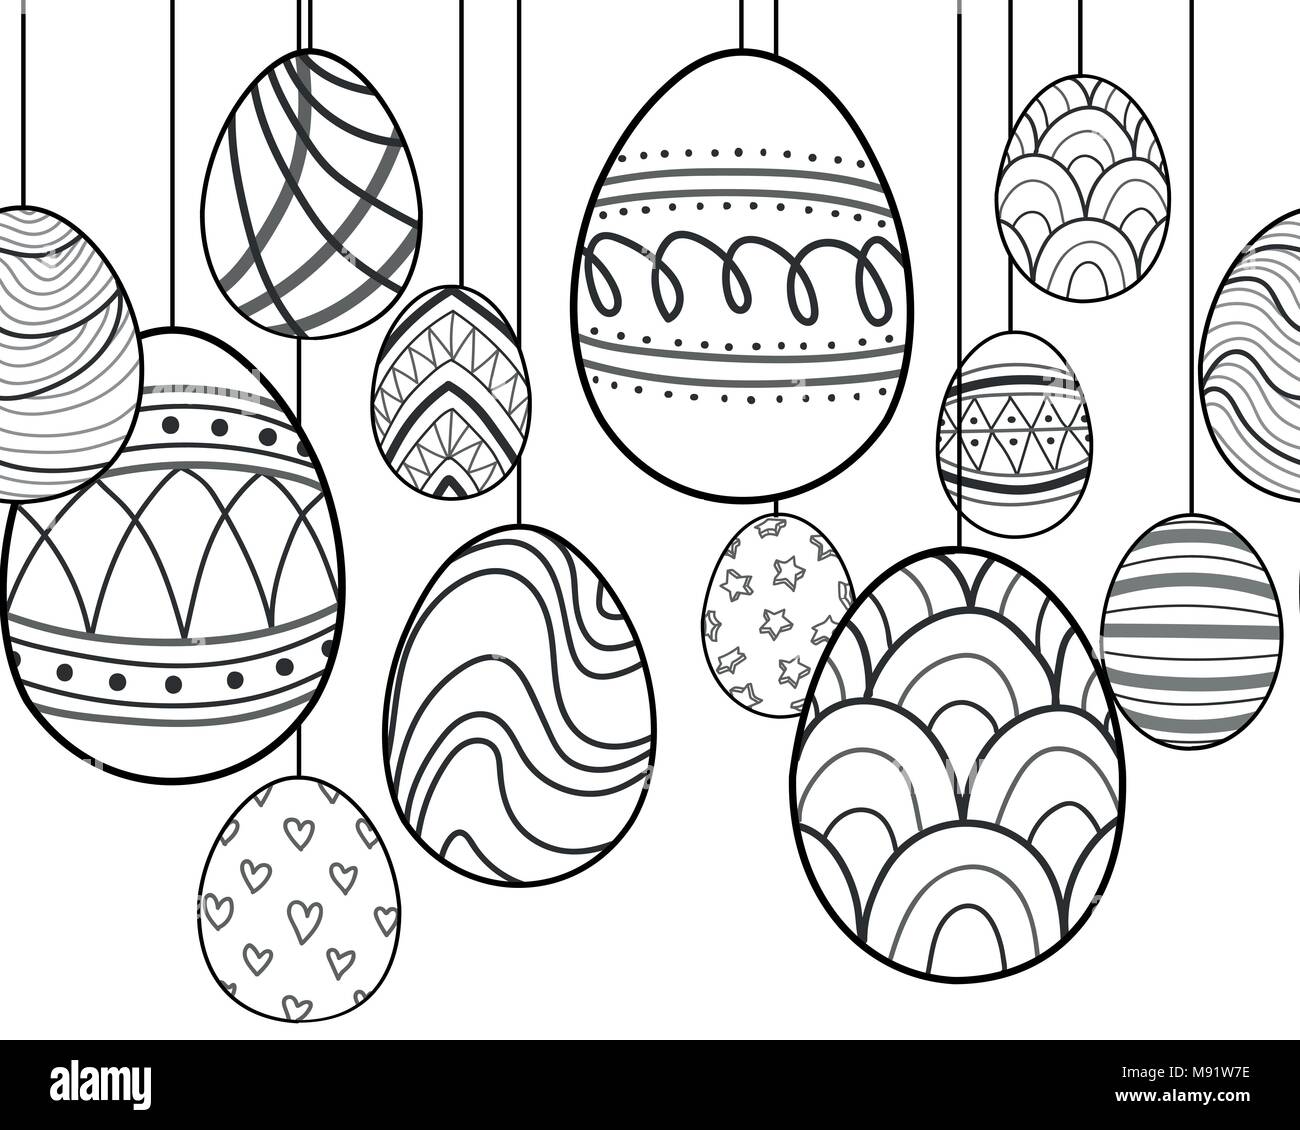 Easter eggs in black outline and white plane hang on white background. Cute hand drawn seamless pattern design for Easter festival in vector illustrat Stock Vector